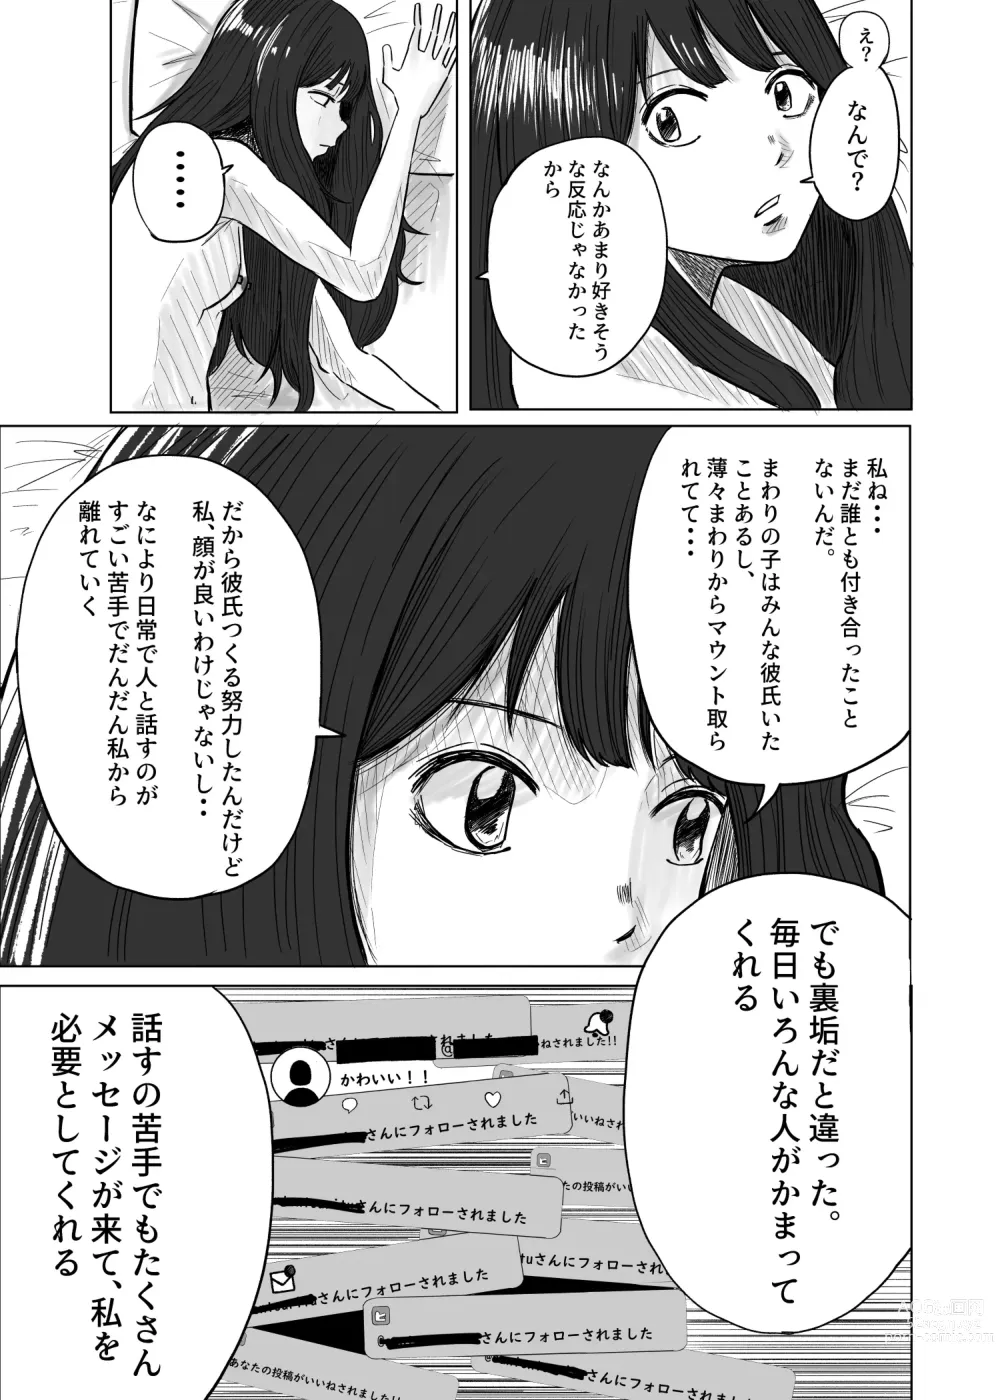 Page 13 of doujinshi M ni Naru